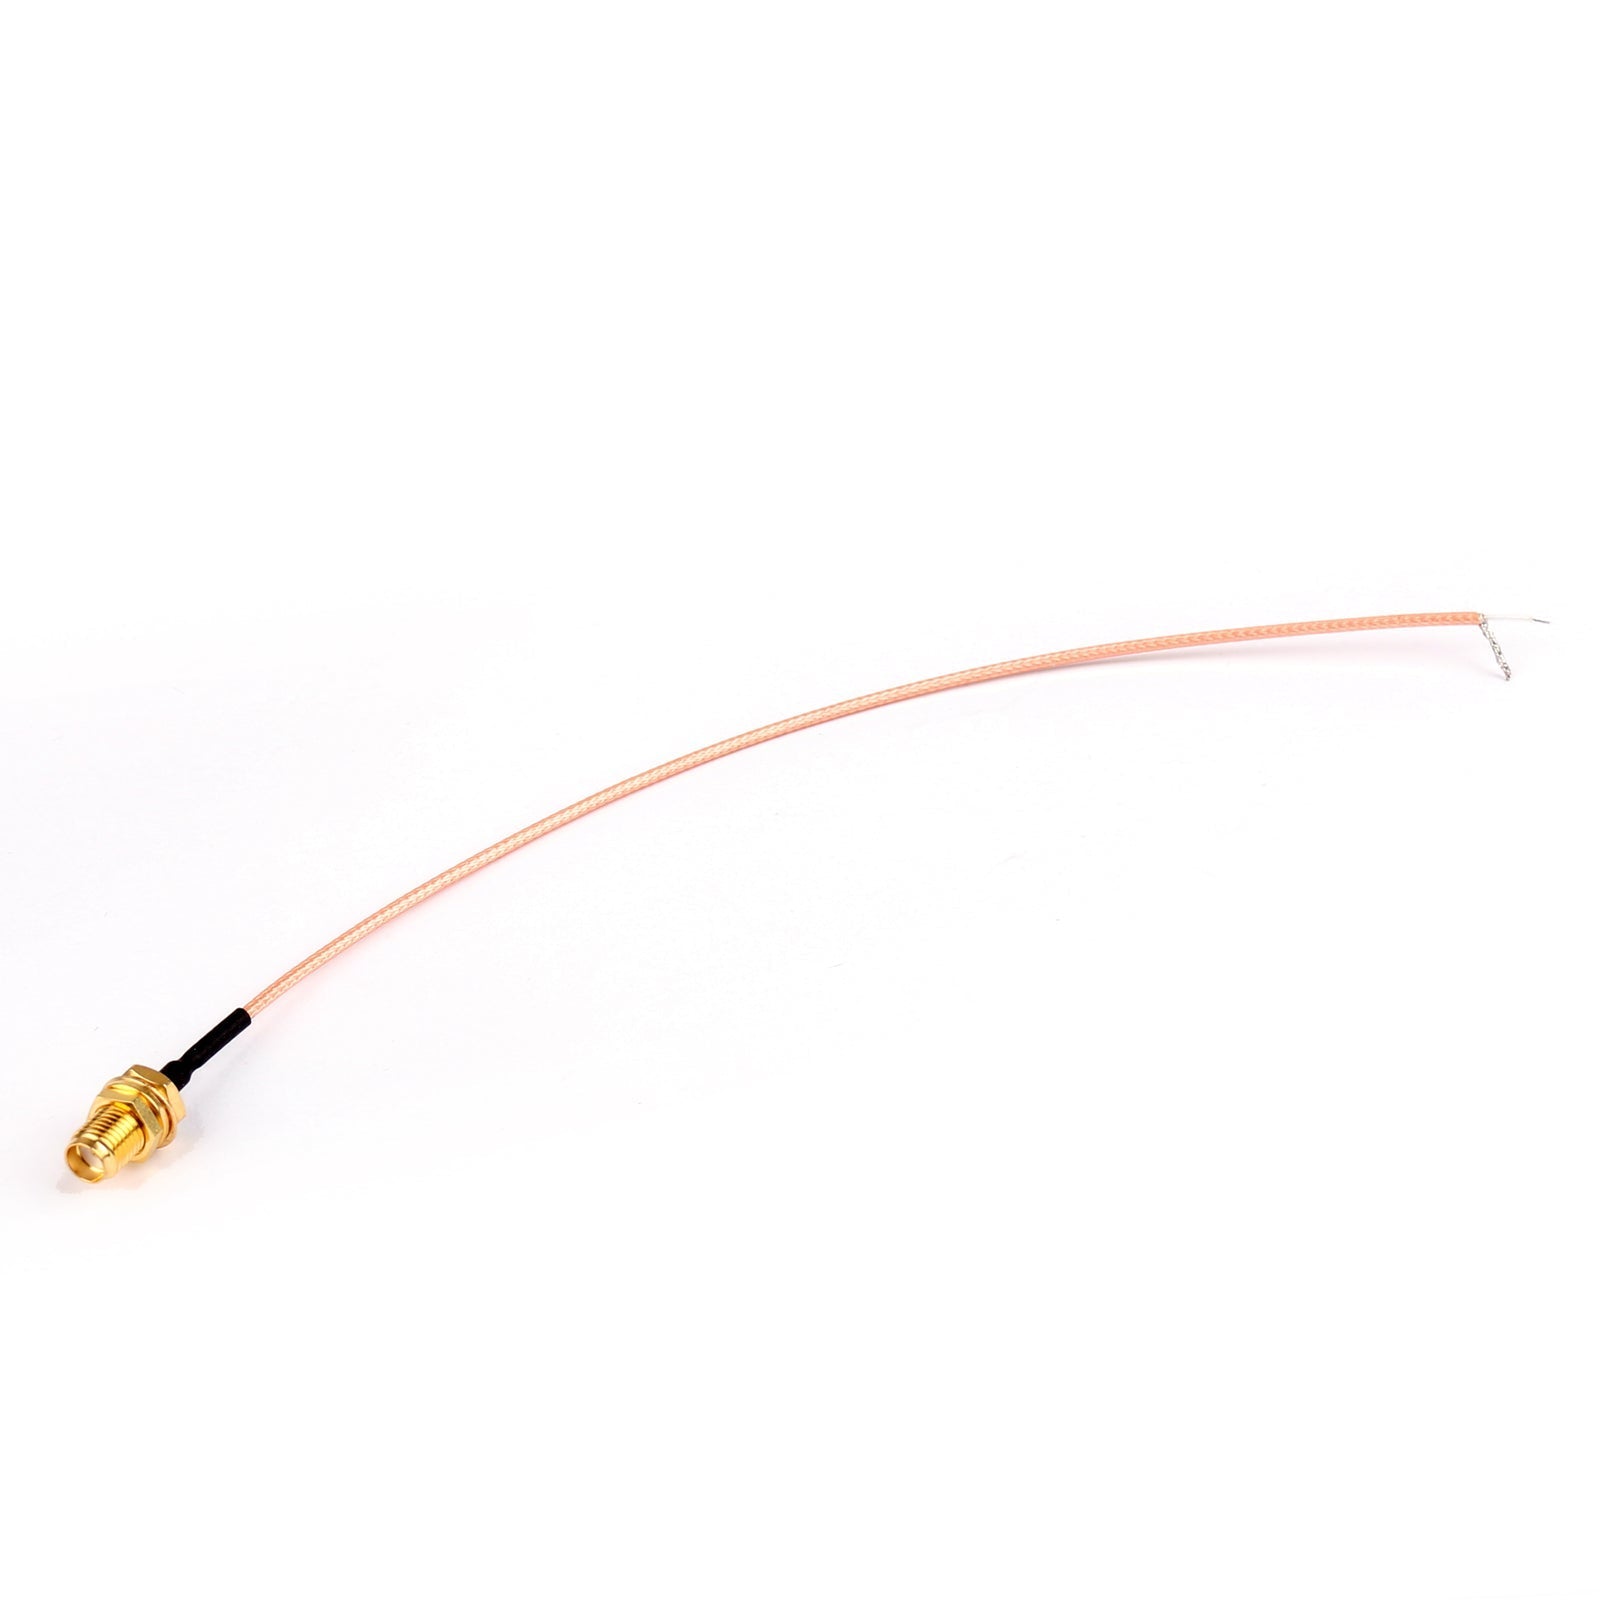 Cable flexible de soldadura RG178 SMA hembra a PCB para WIFI inalámbrico de baja pérdida de EE. UU. 20CM